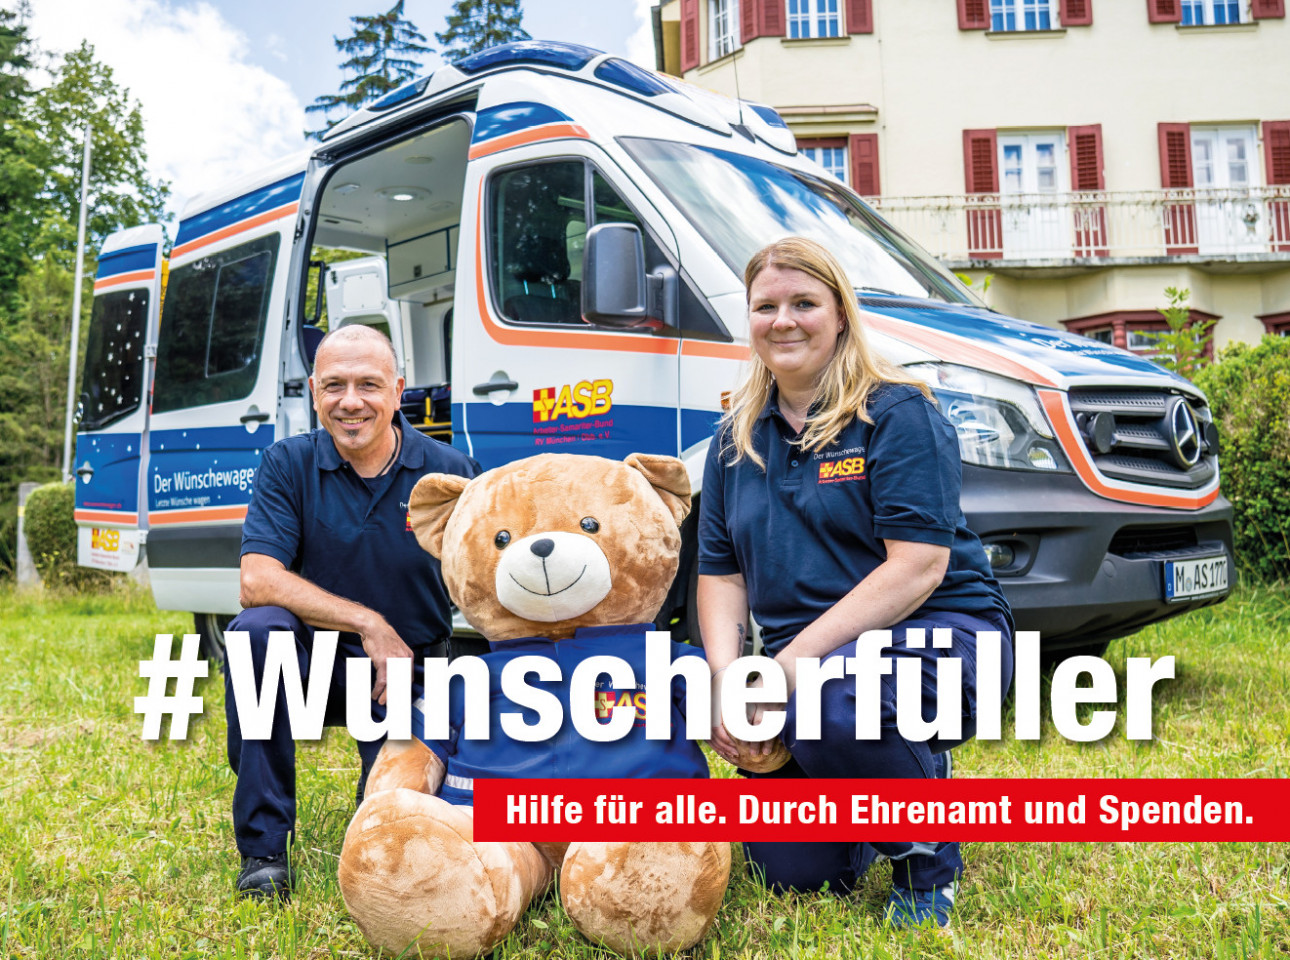 Kampagne-Wuenschewagen-Wunscherfueller-v2.jpg